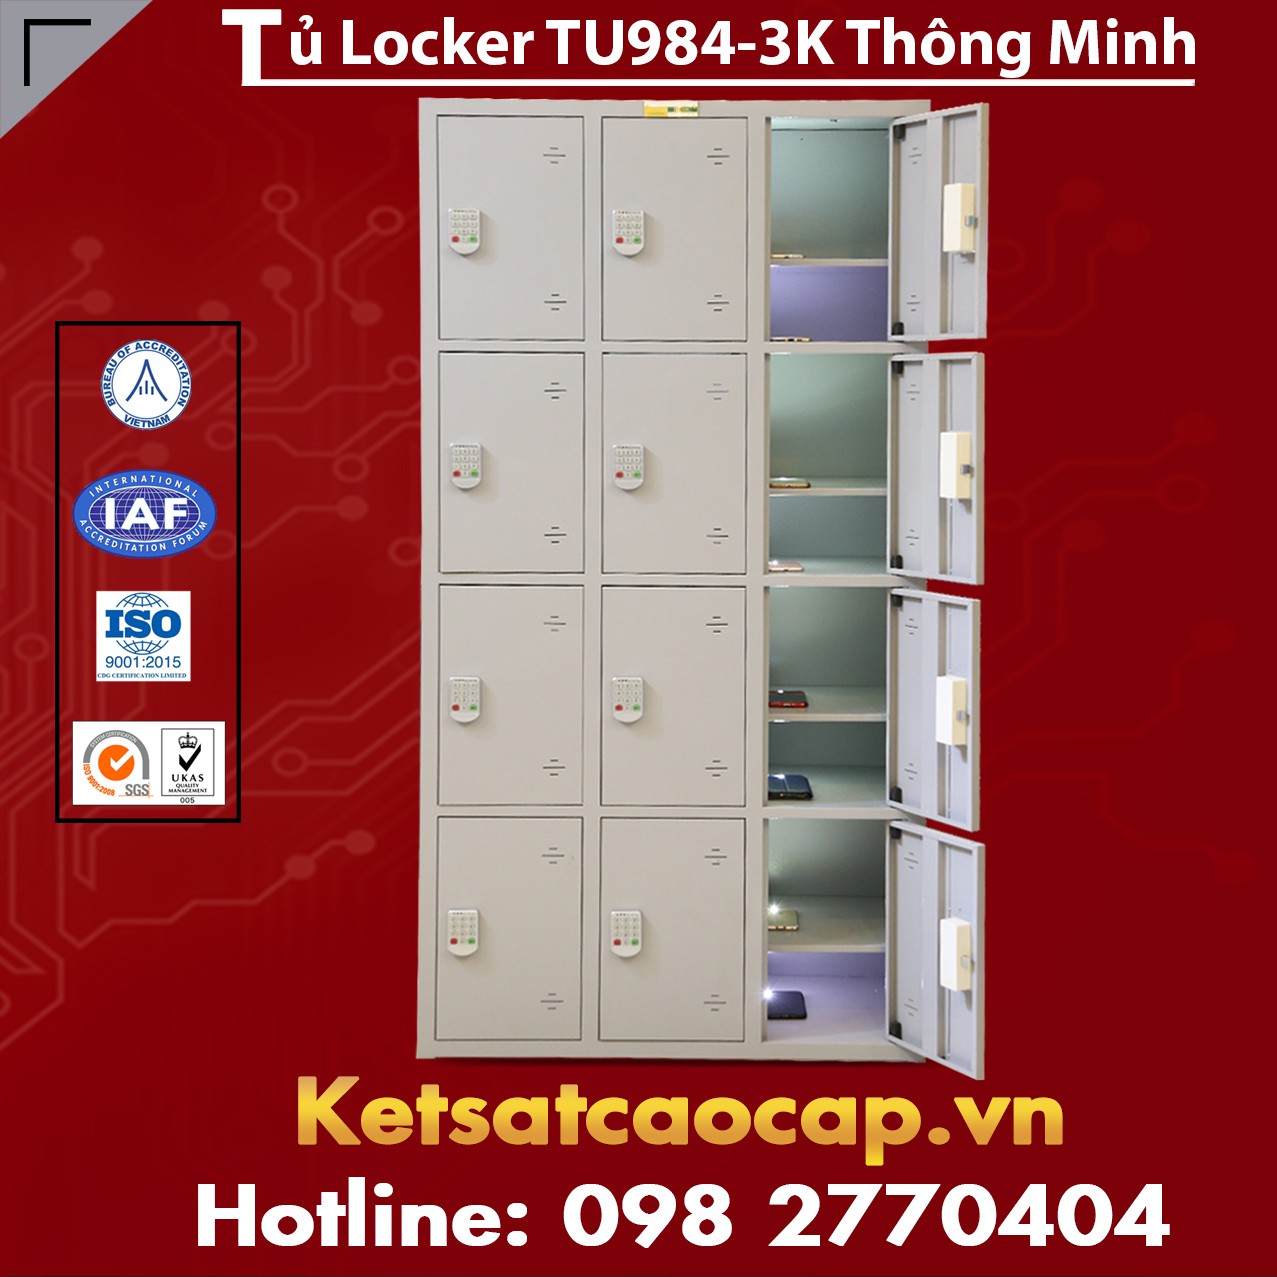 Tủ Locker TU984-3K Thông Minh